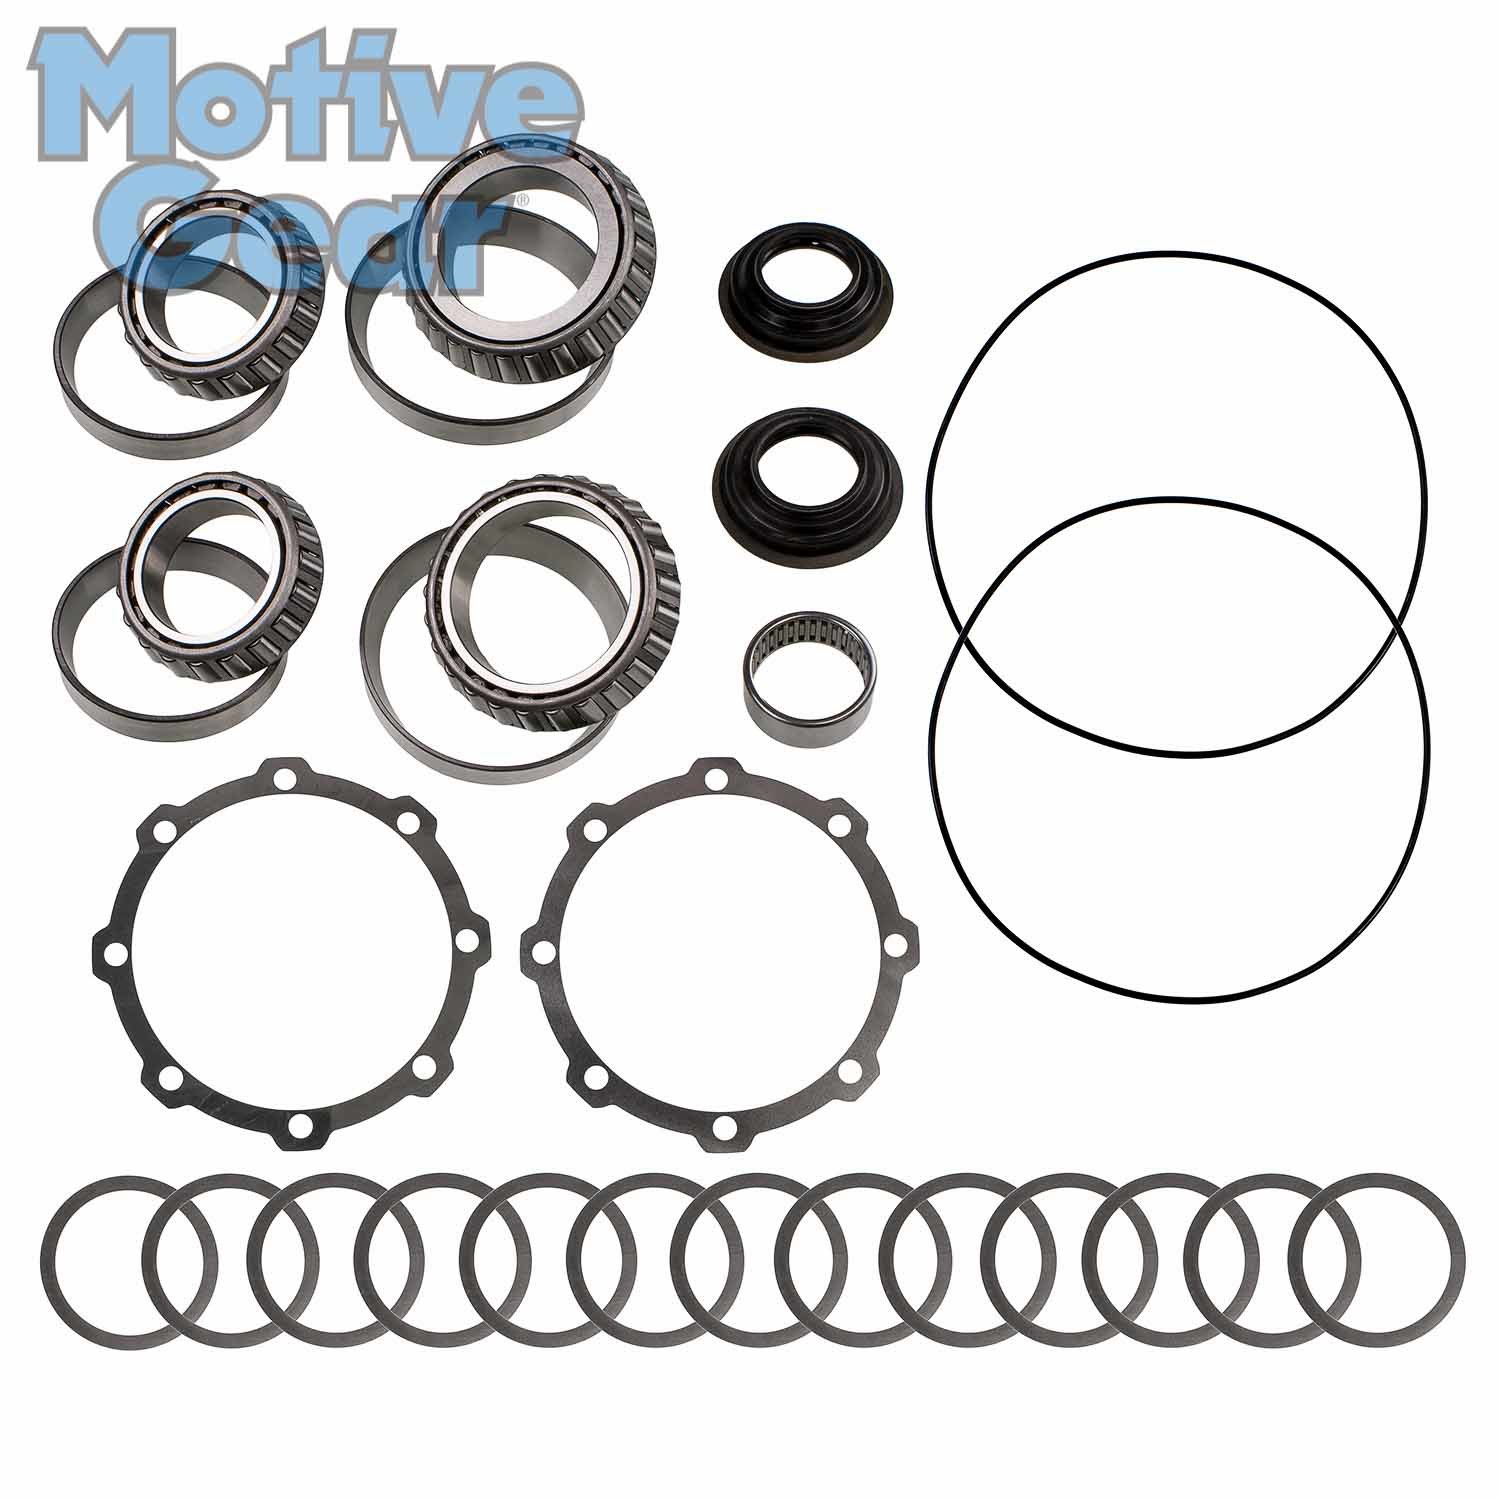 Motive Gear R10RVLMKT - Differential Installation Kit, Master, Bearings / Gasket / Seals / Thread Locker, Chevy Corvette 1997-2013, Kit